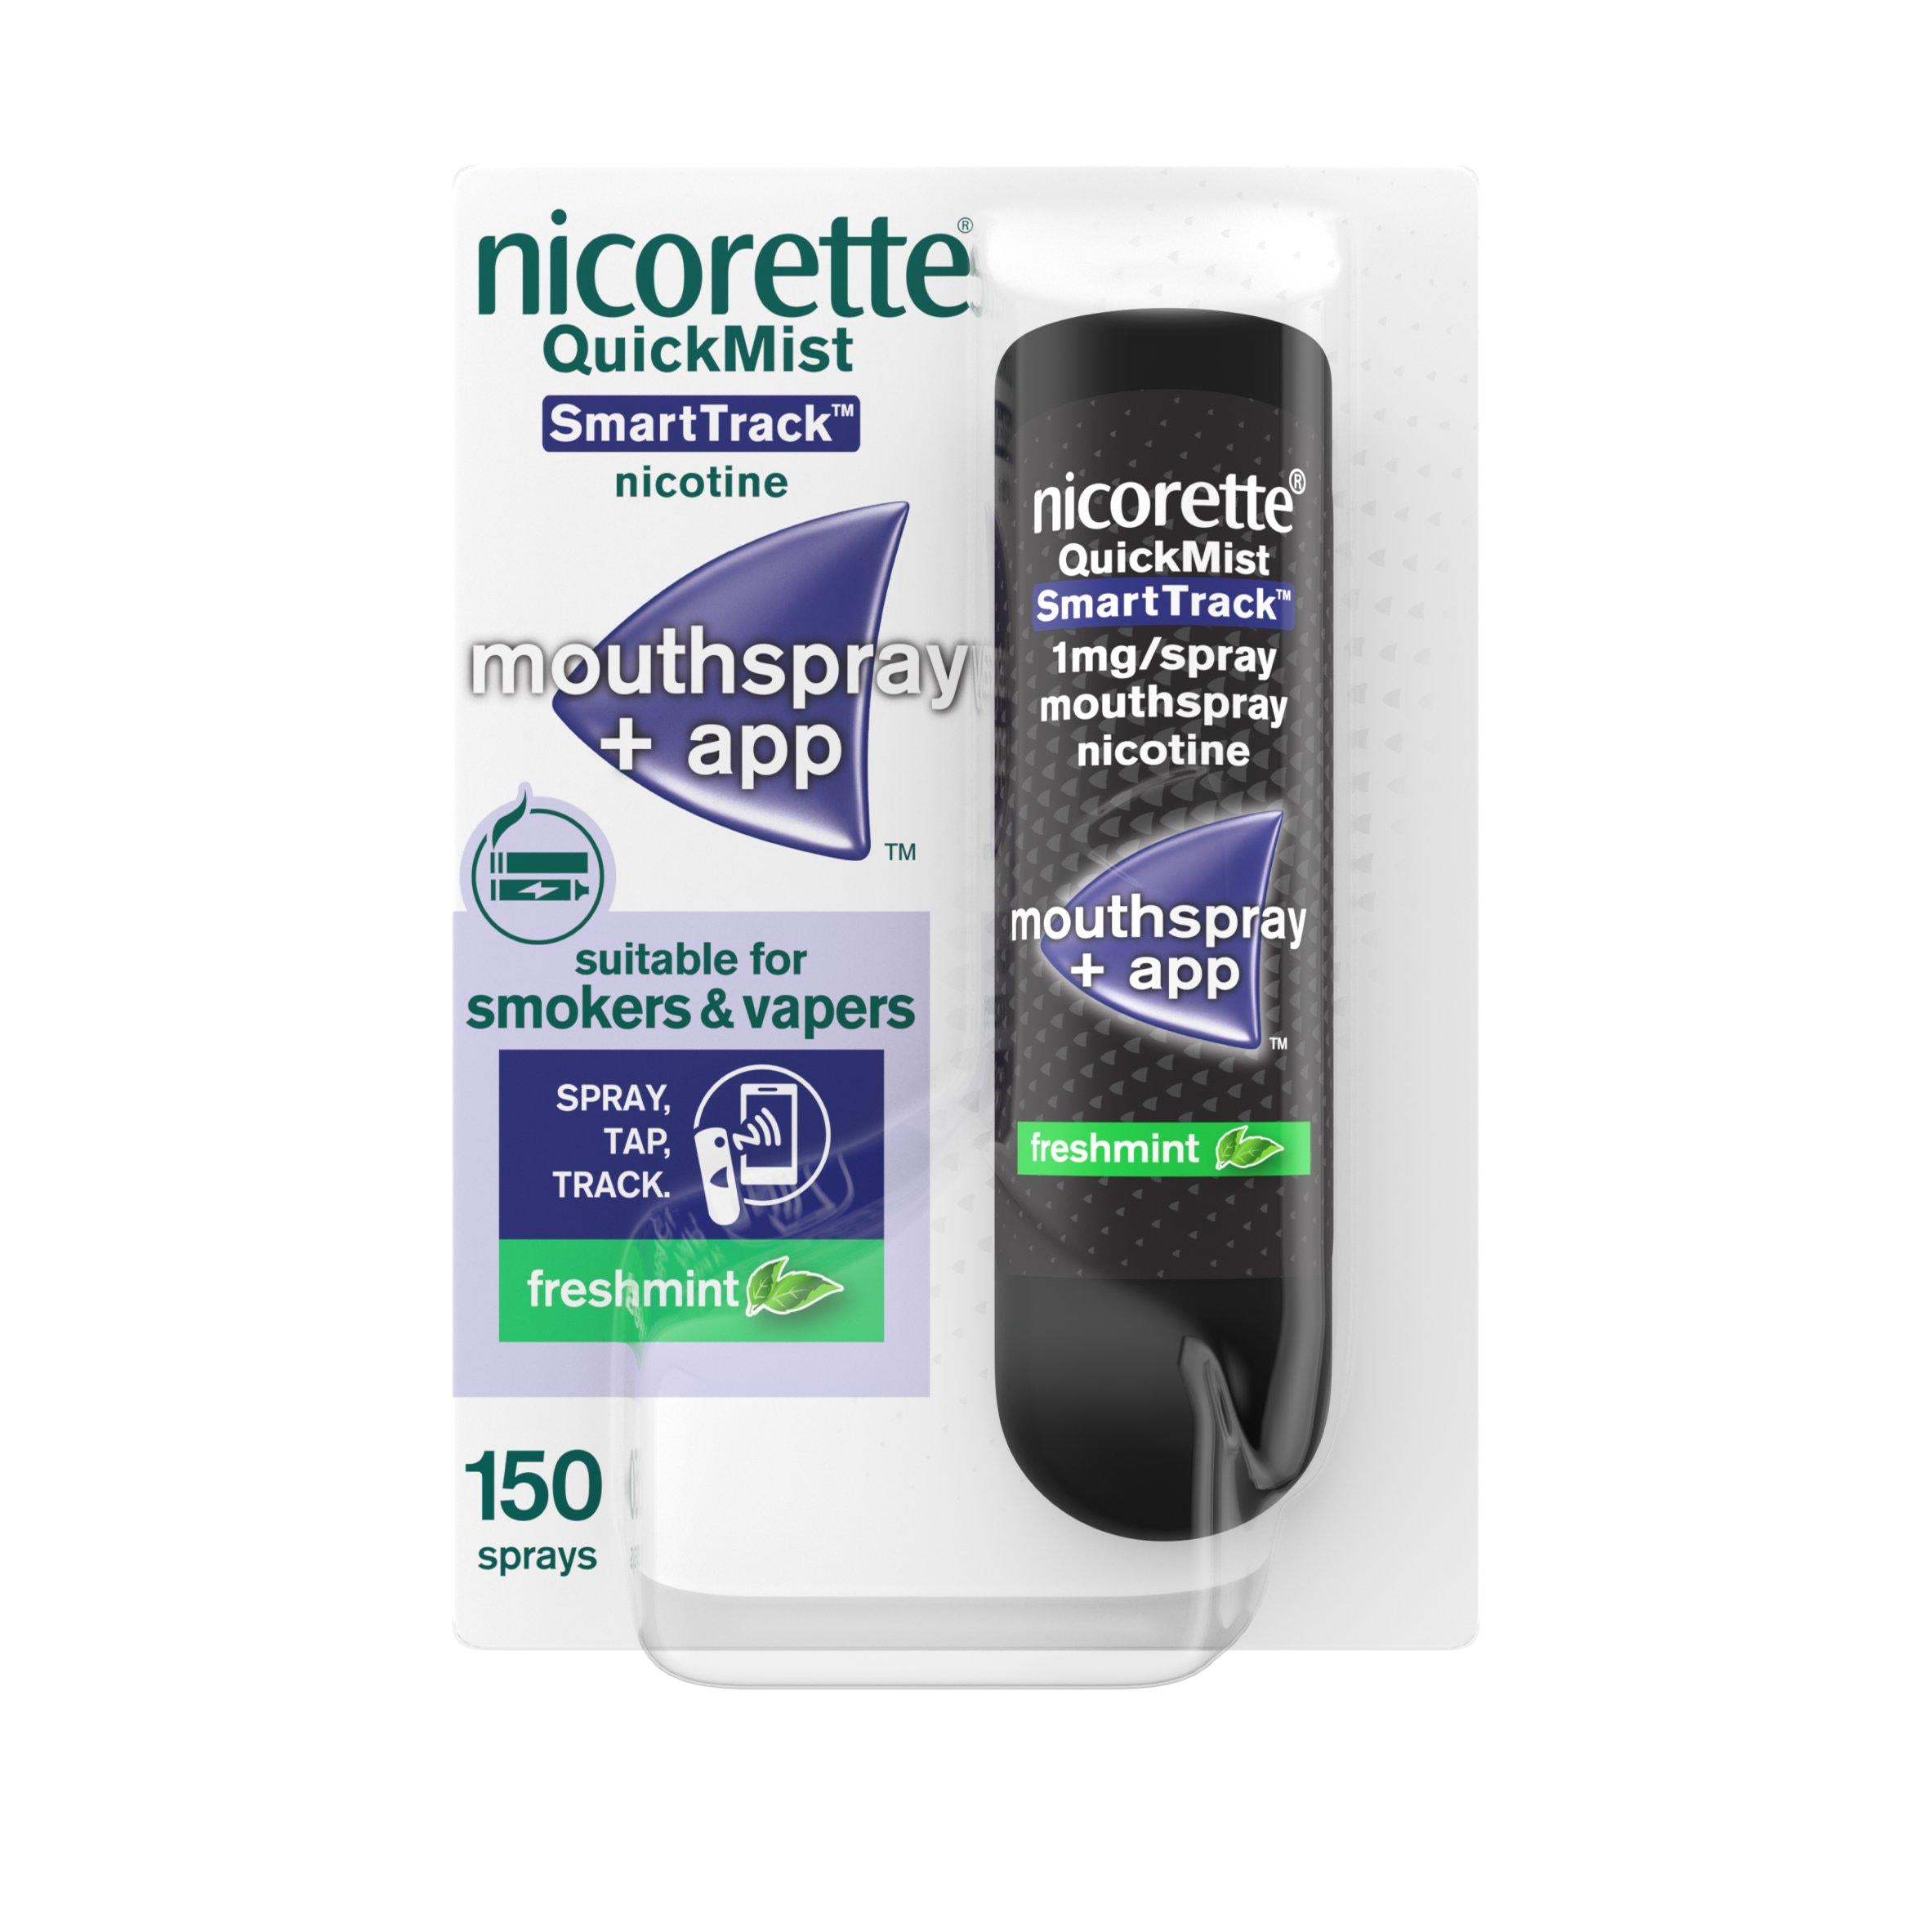 Nicorette QuickMist SmartTrack Mouthspray Nicotine Freshmint 1mgx150 smoking control Sainsburys   